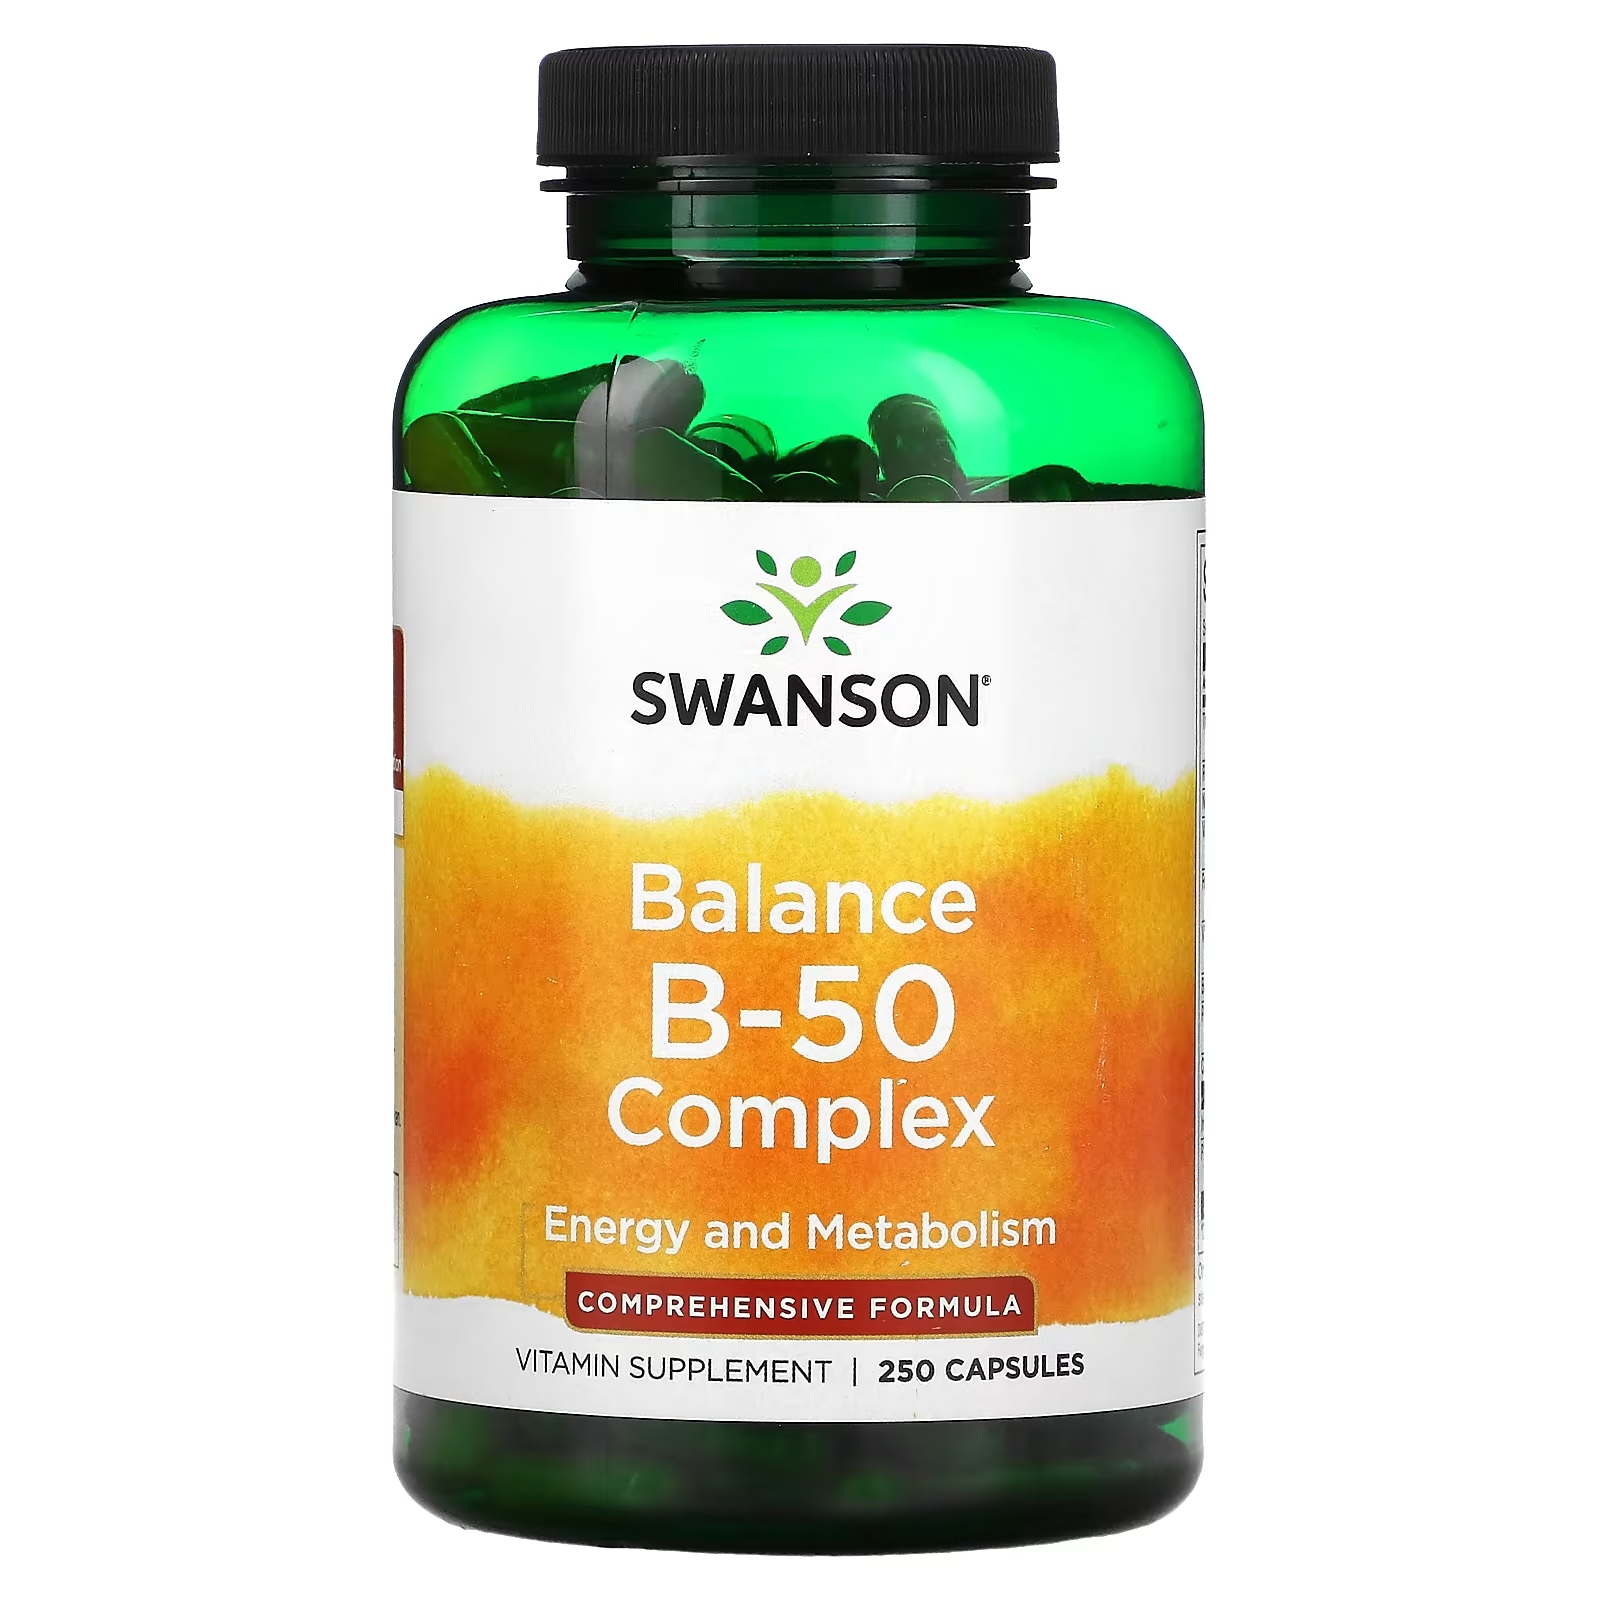 Мультивитаминный Комплекс Swanson Balance B-50, 250 капсул